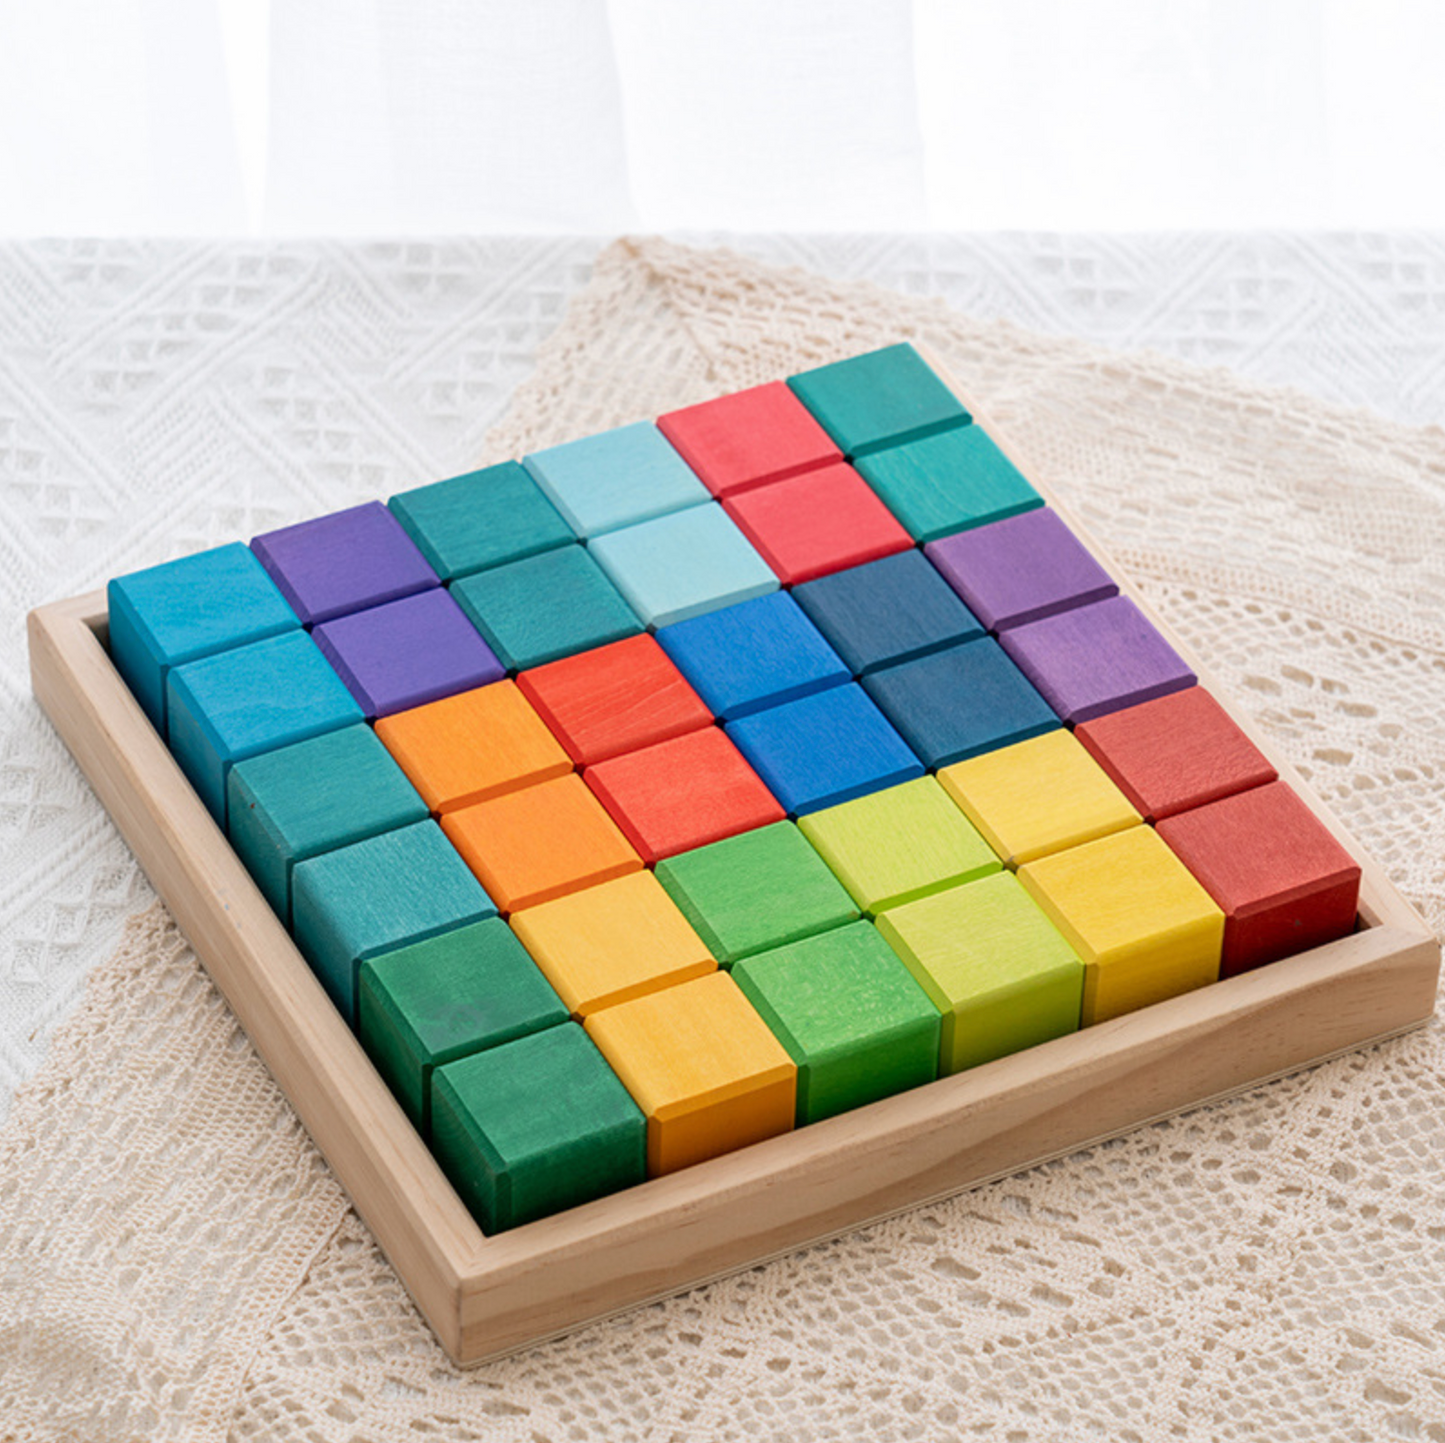 Prism Play Rainbow Wooden Building Blocks Cubic Mosaic 36 pcs